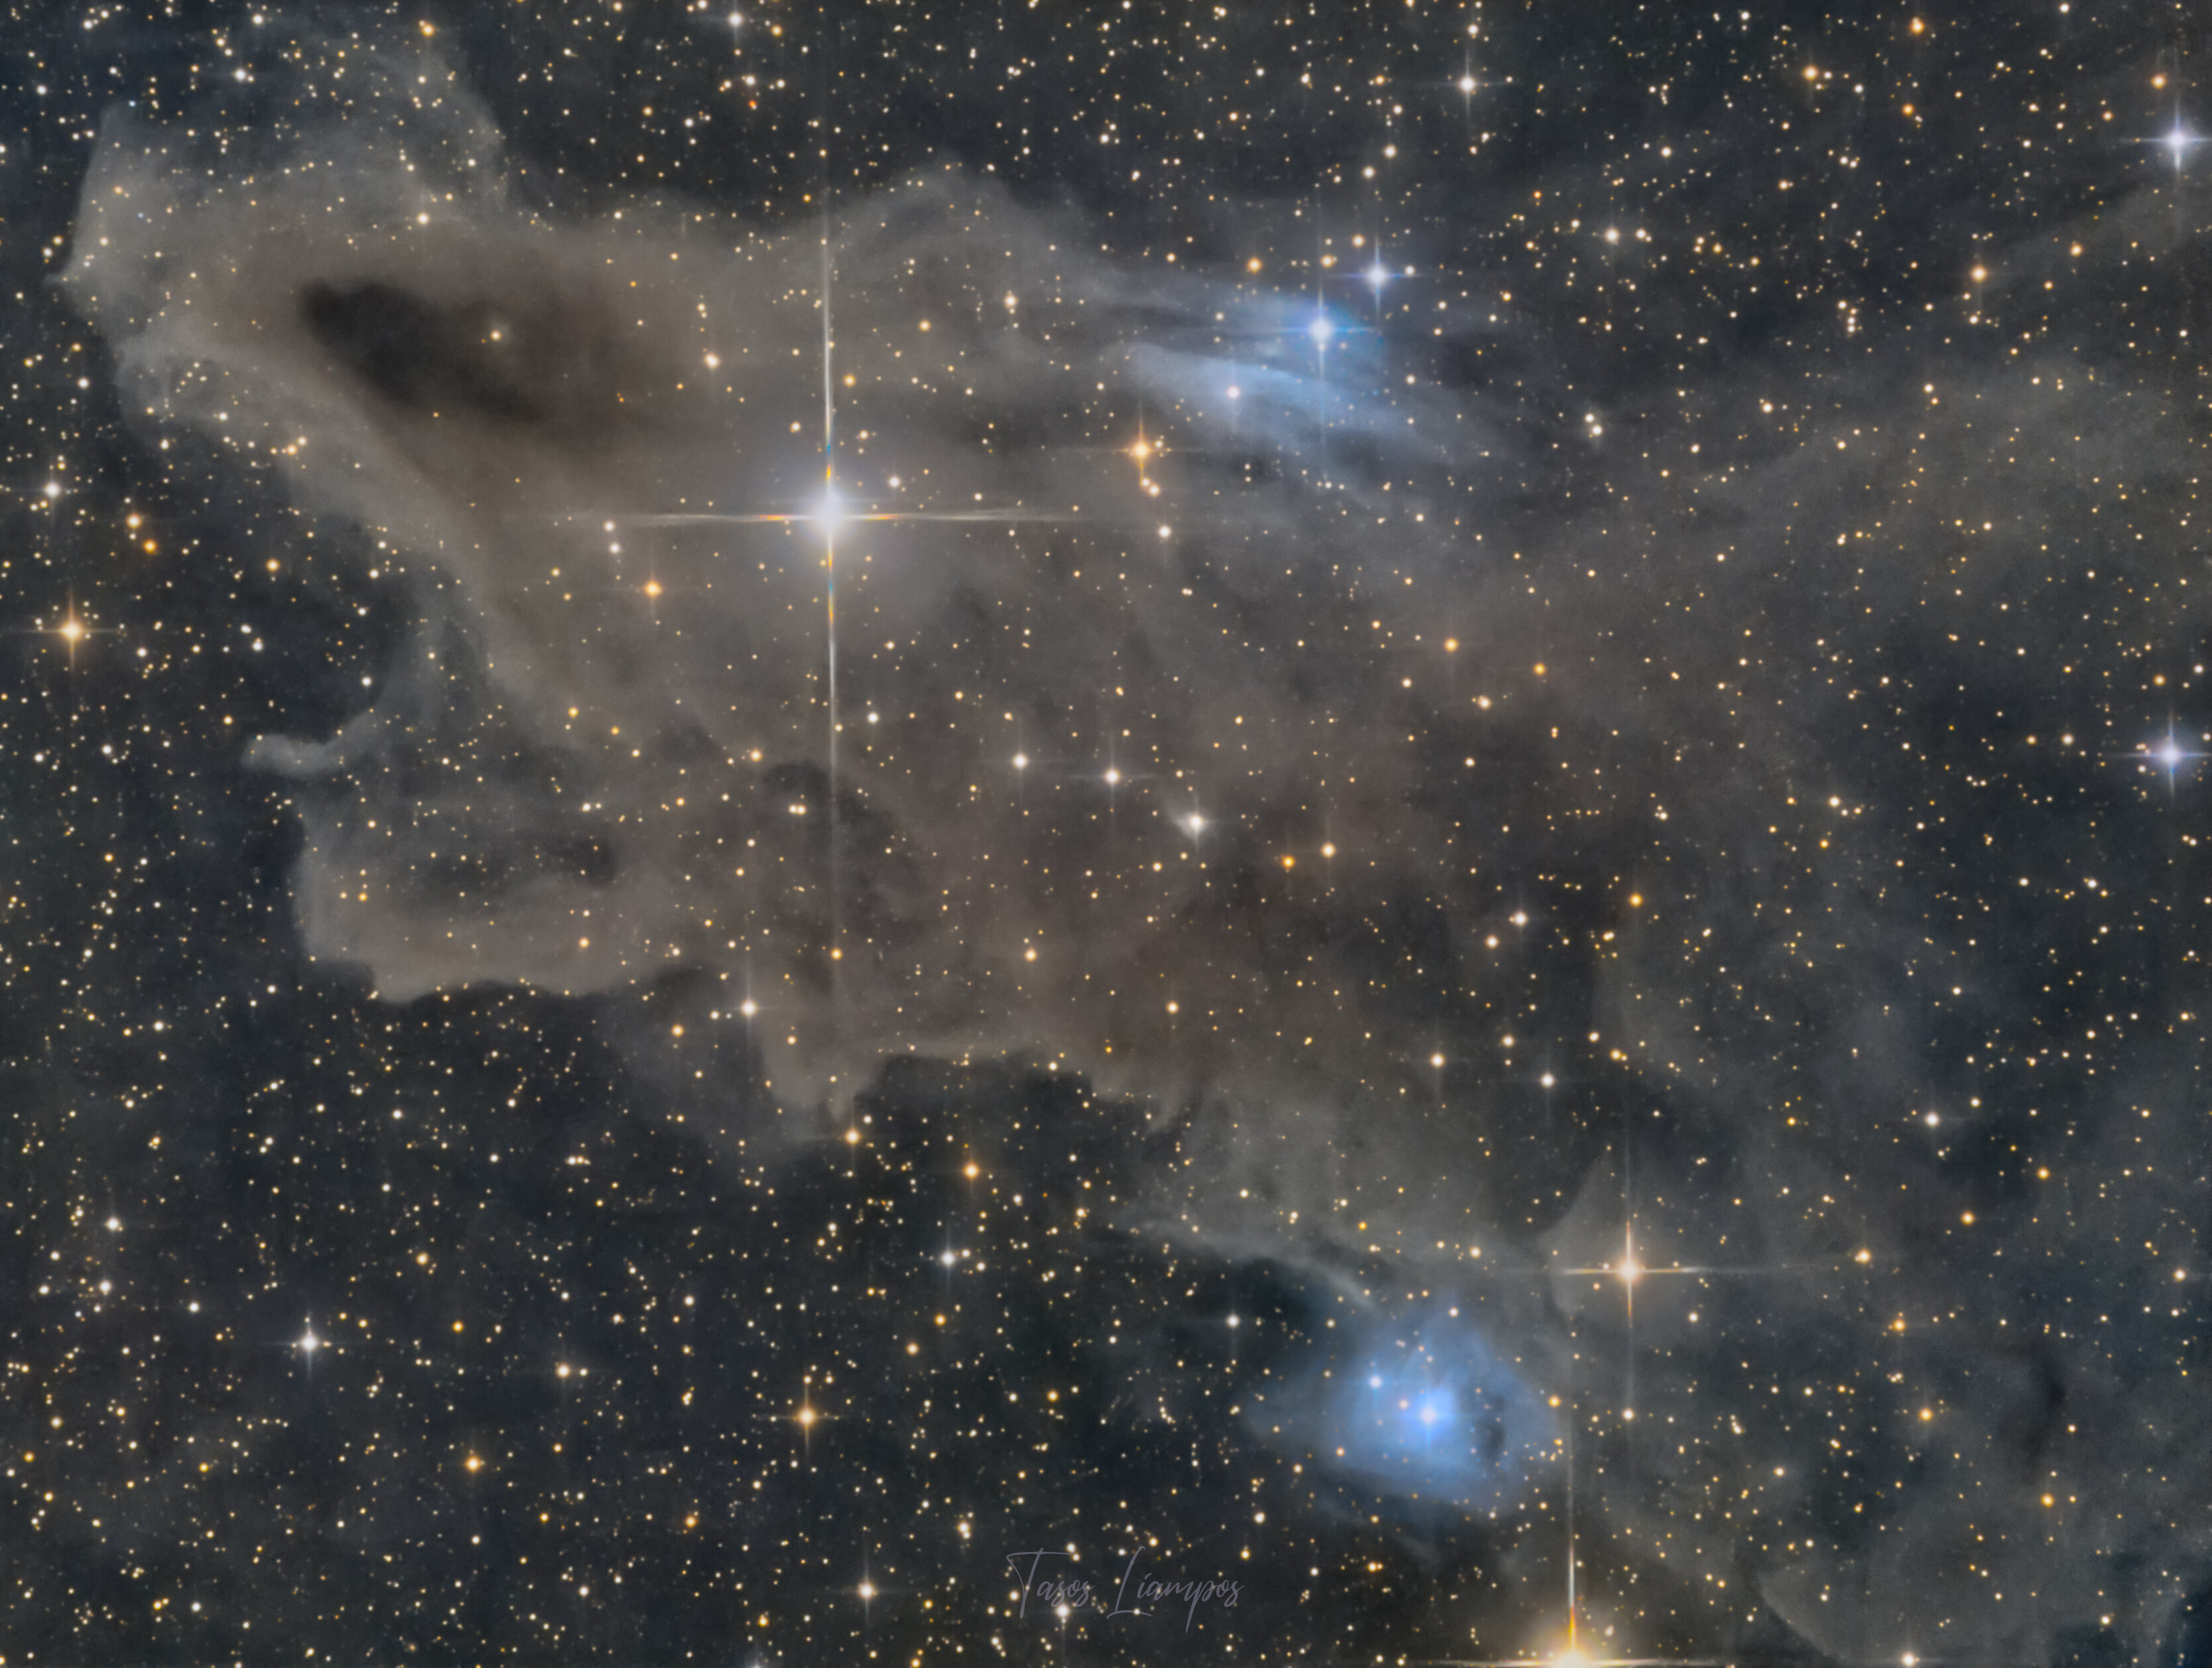 Ldn 1235 , Vdb 149 & Vdb 150 - Sharkhead Nebula